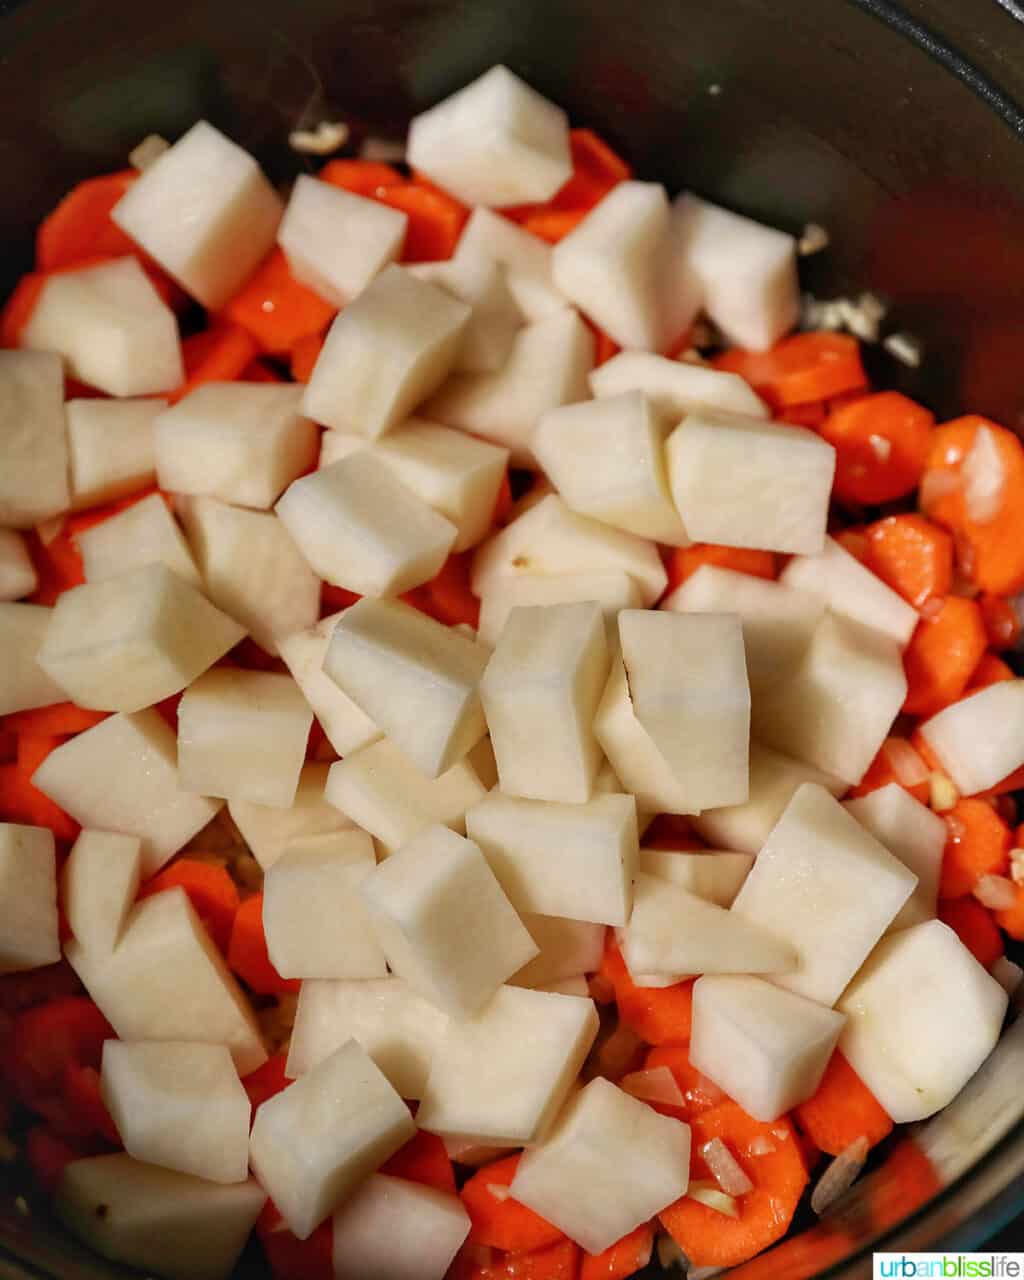 adding potatoes to carrots